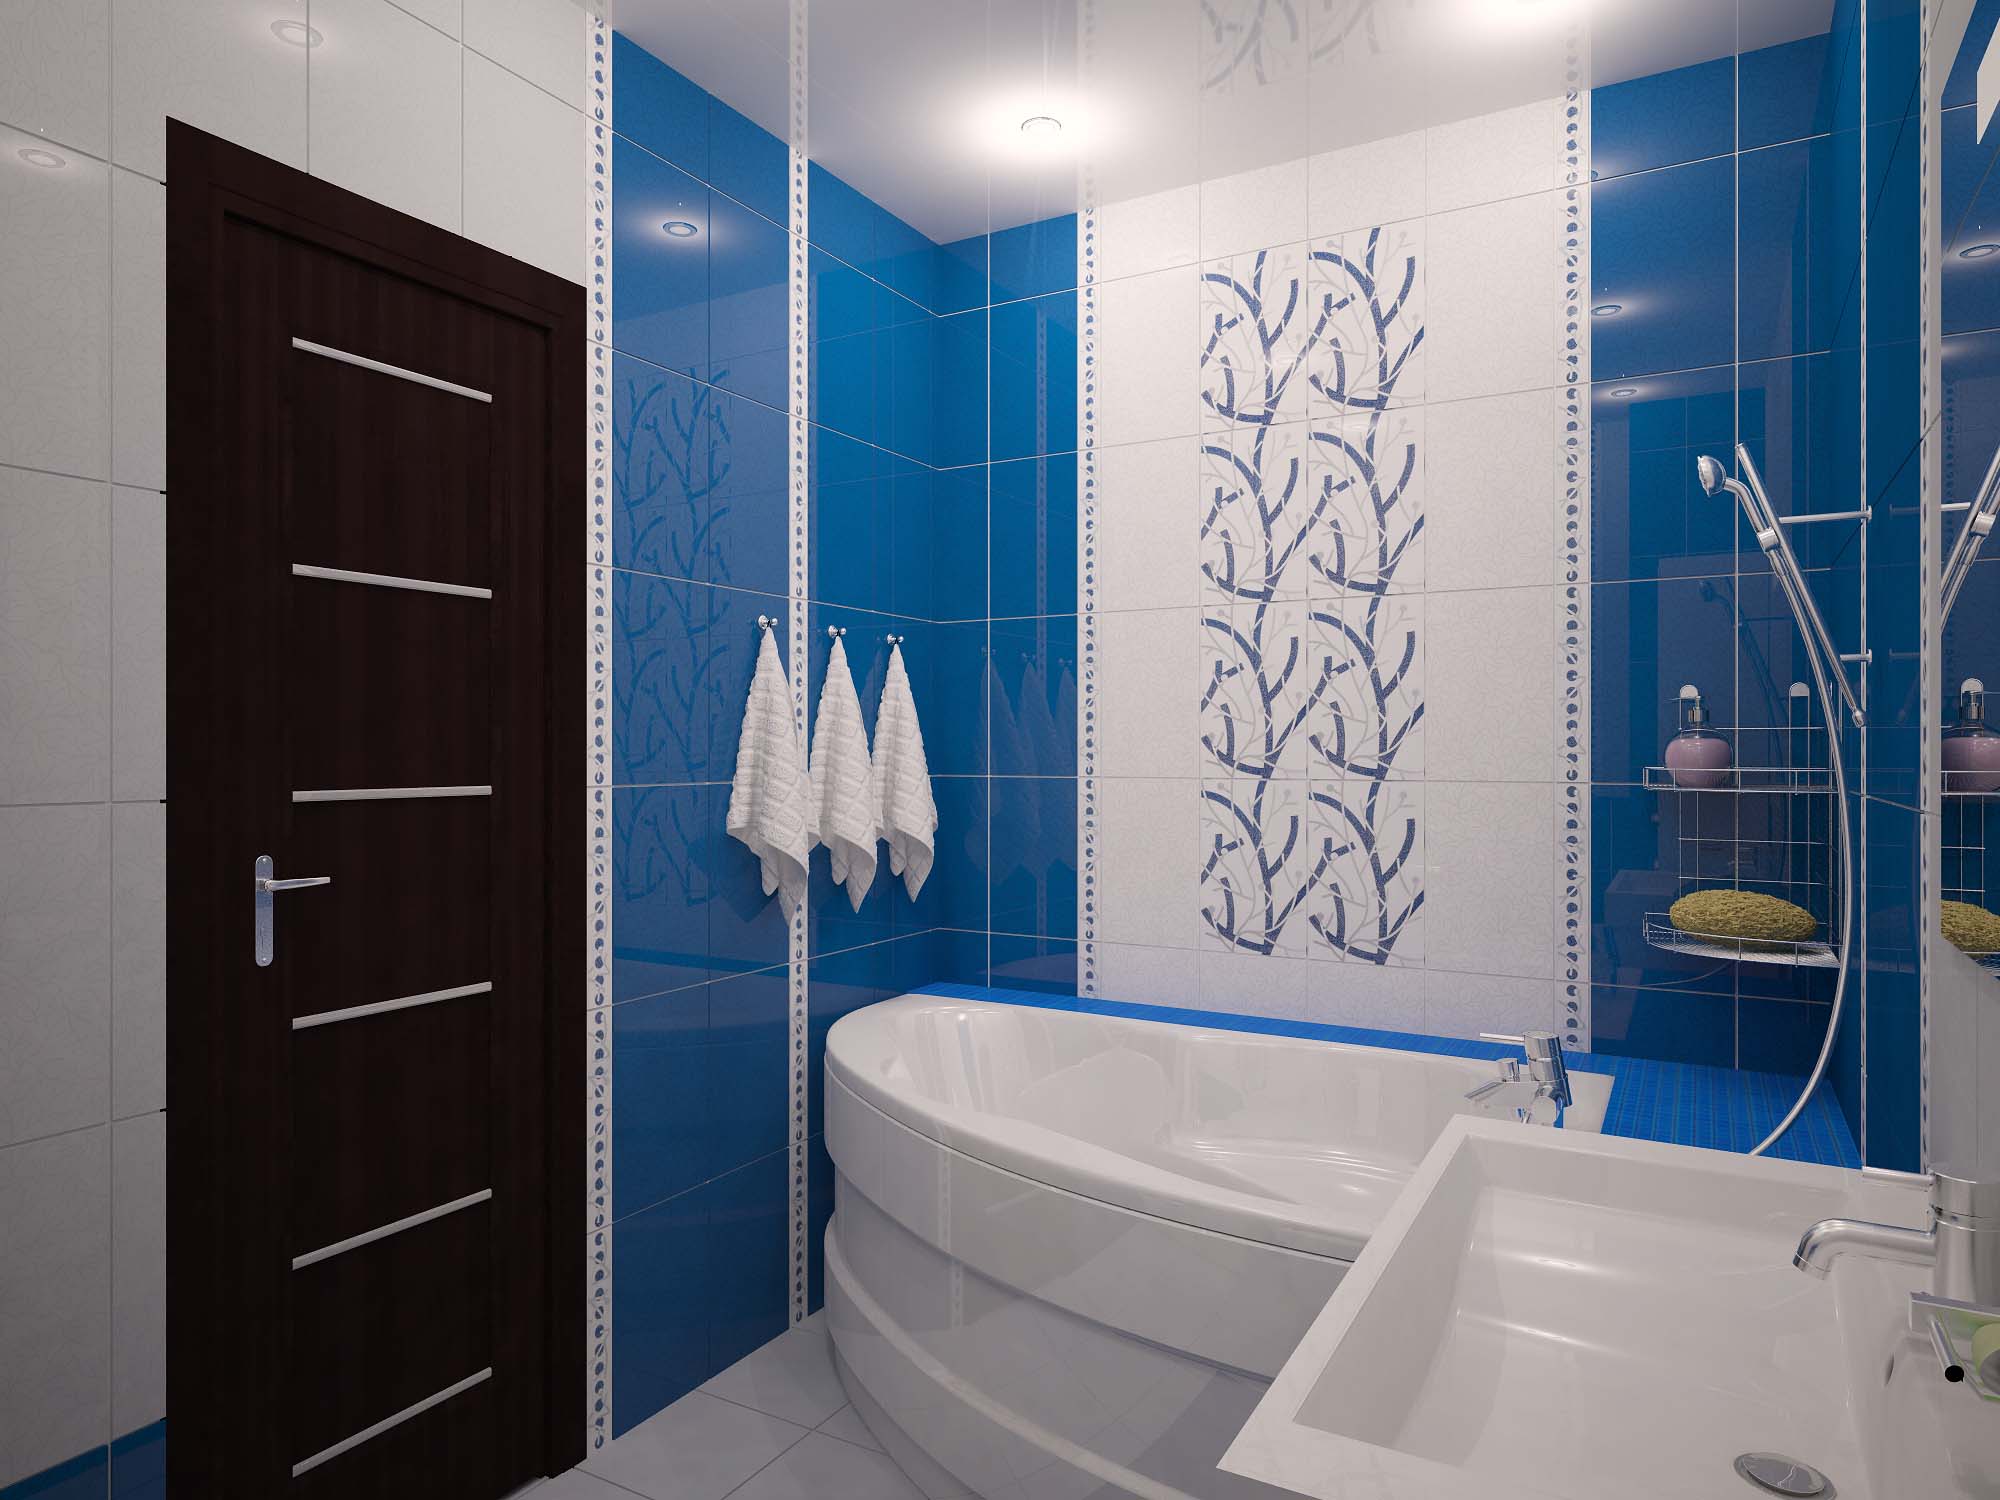 Banyo tasarımı 6 metrekare mavi-beyaz renk